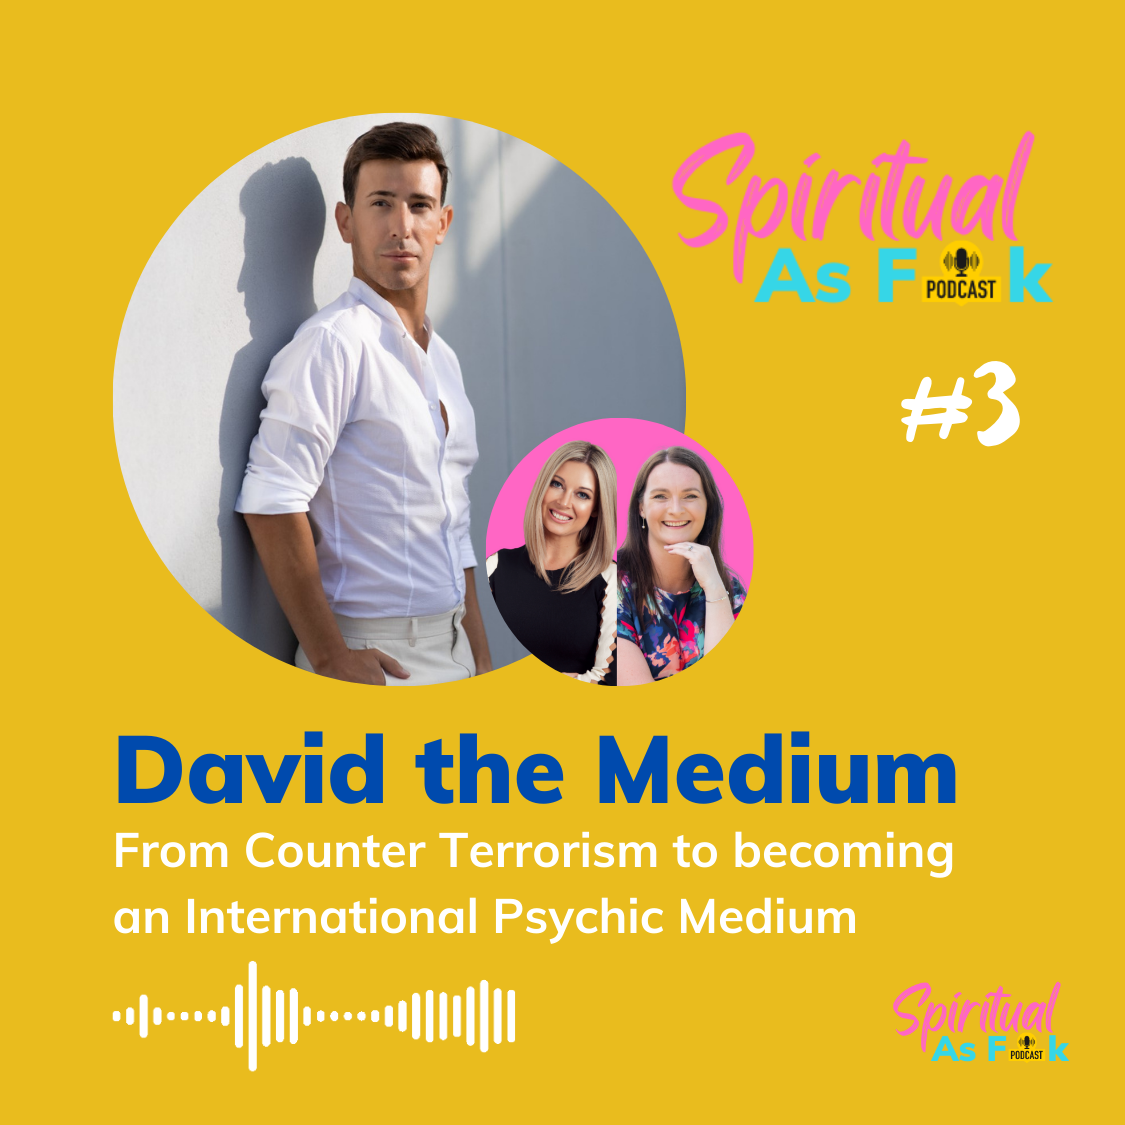 #3 - David the Medium - From Counter Terrorism to becoming an International Psychic Medium